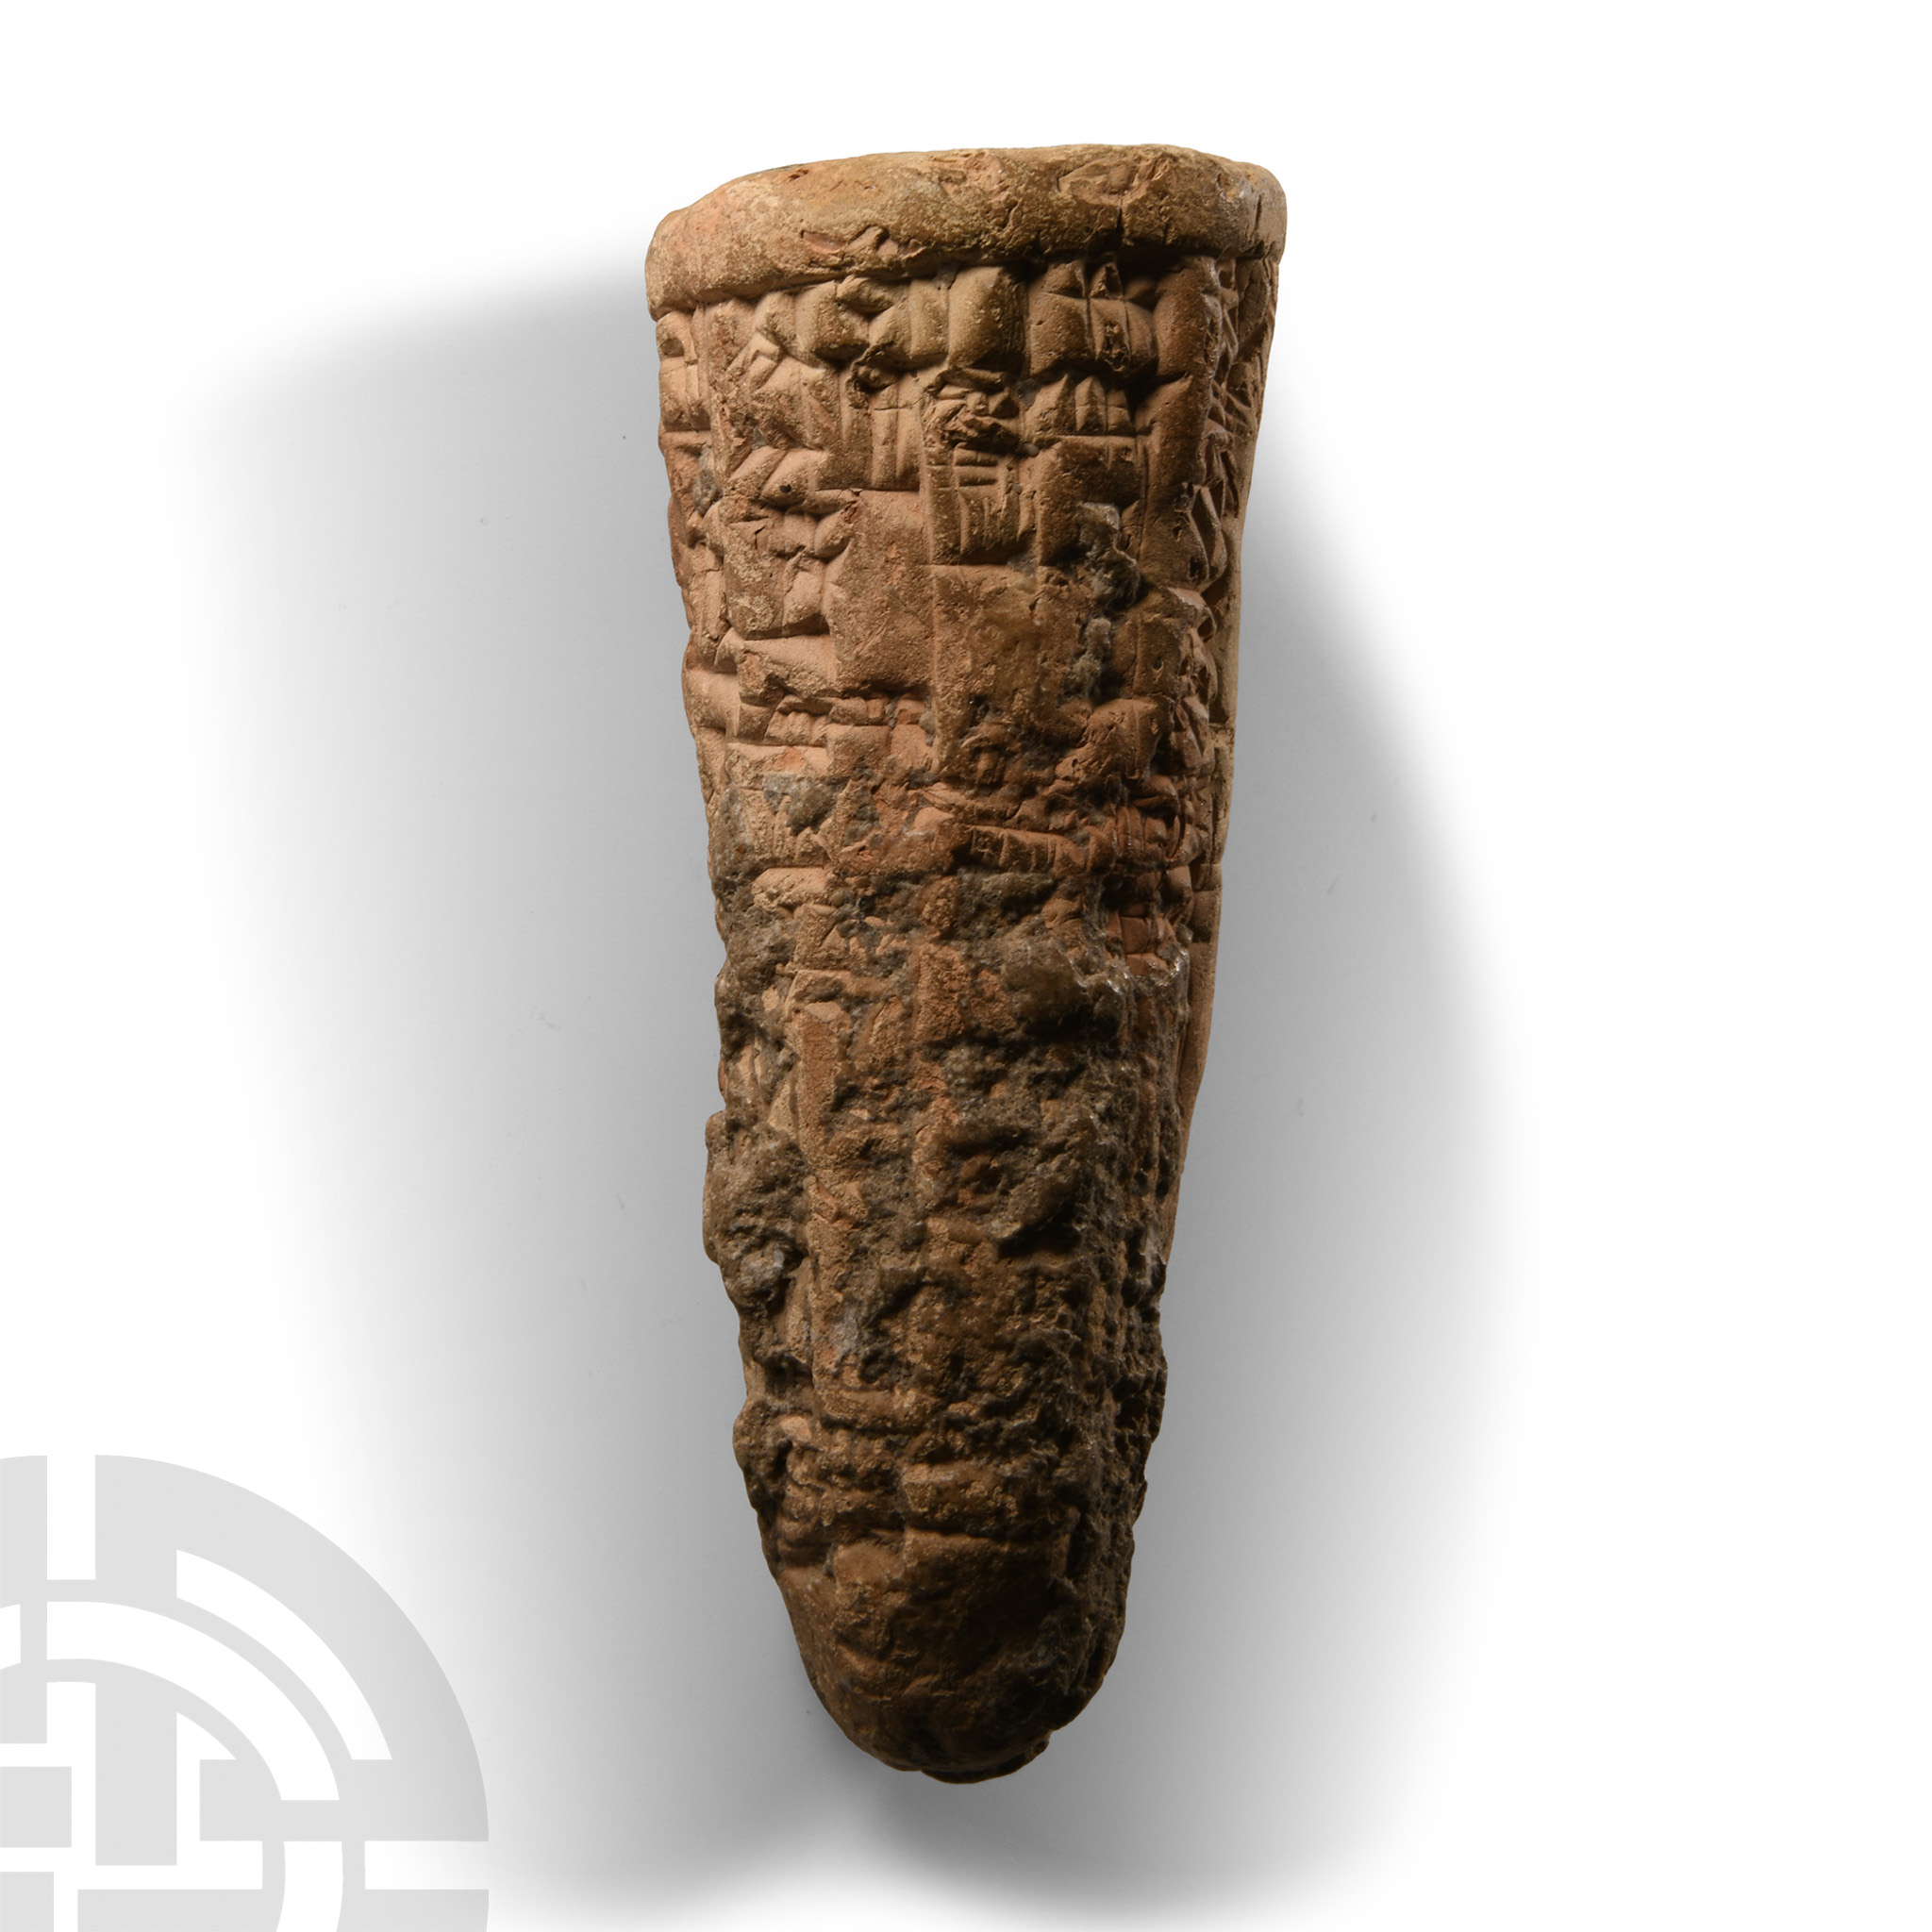 Sumerian Lipit-Ishtar of Isin Cuneiform Foundation Cone - Image 3 of 3